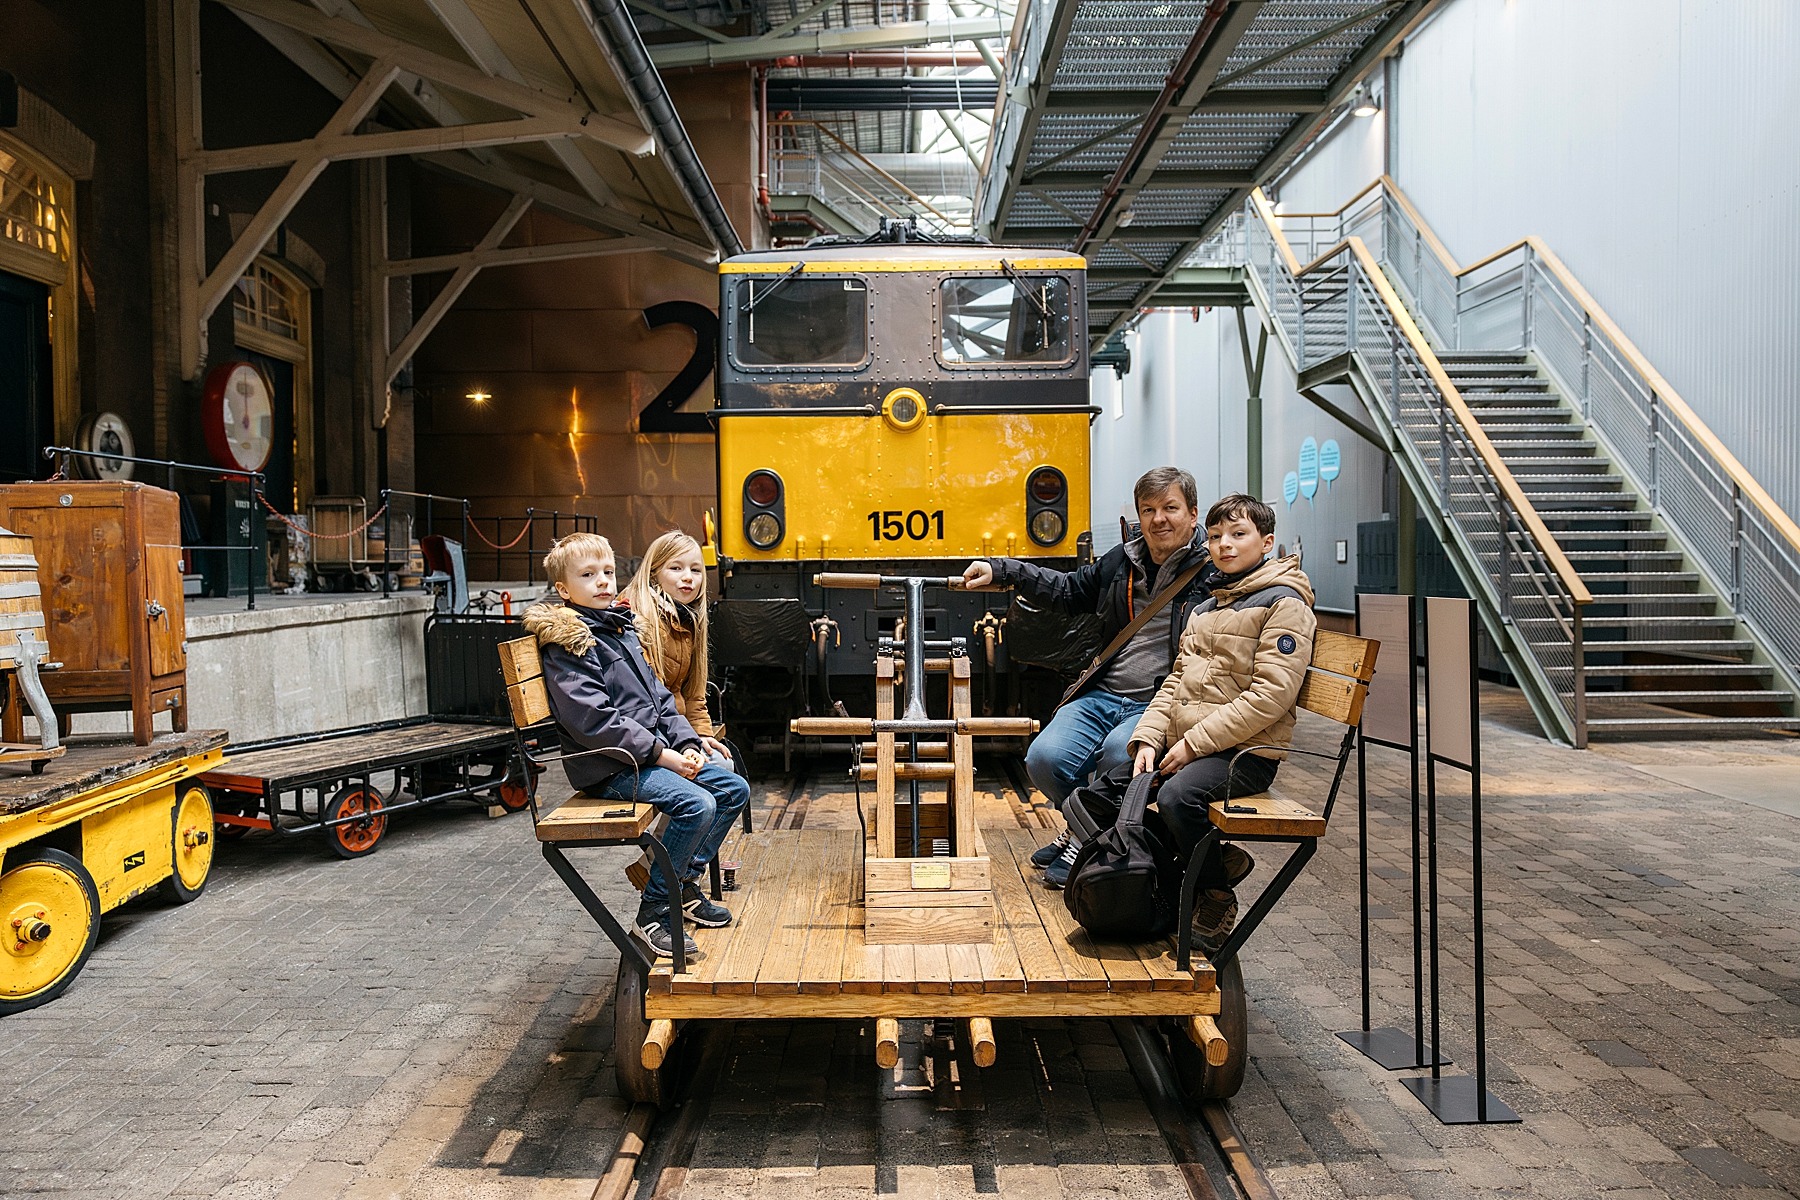 Spoorwegmuseum, l'incroyable musée du train de Utrecht 121